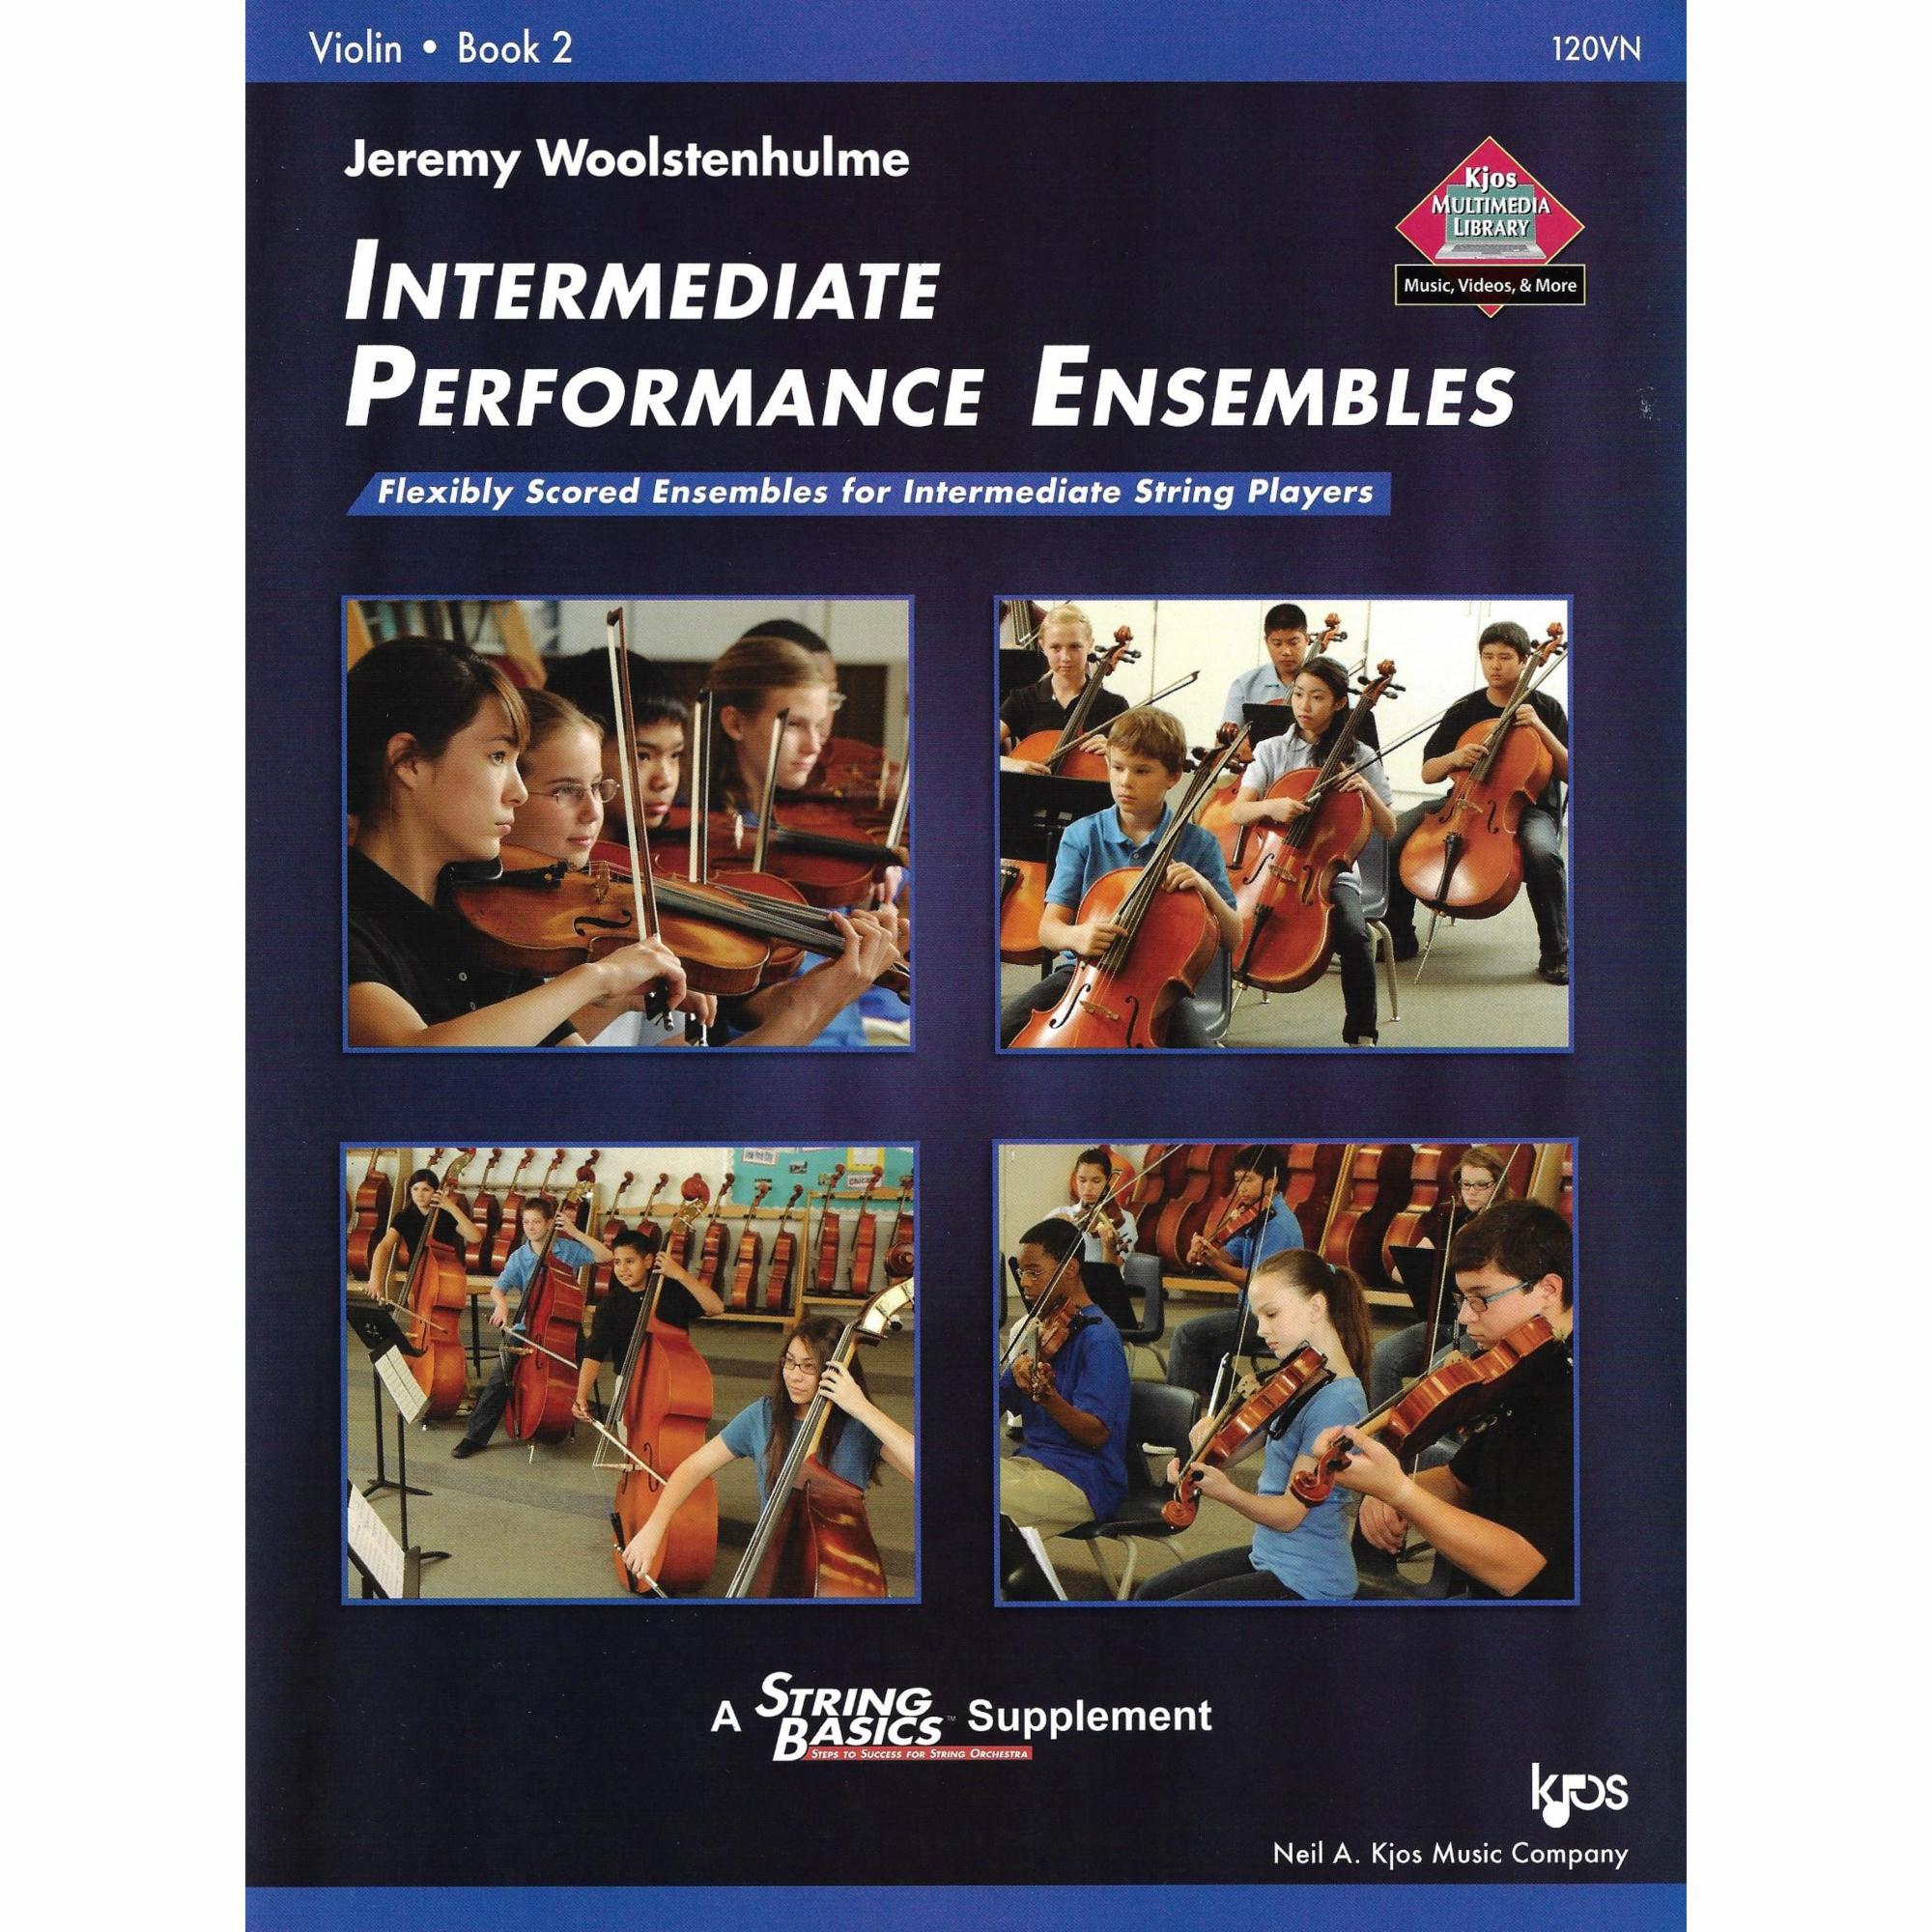 String Basics: Intermediate Performance Ensembles